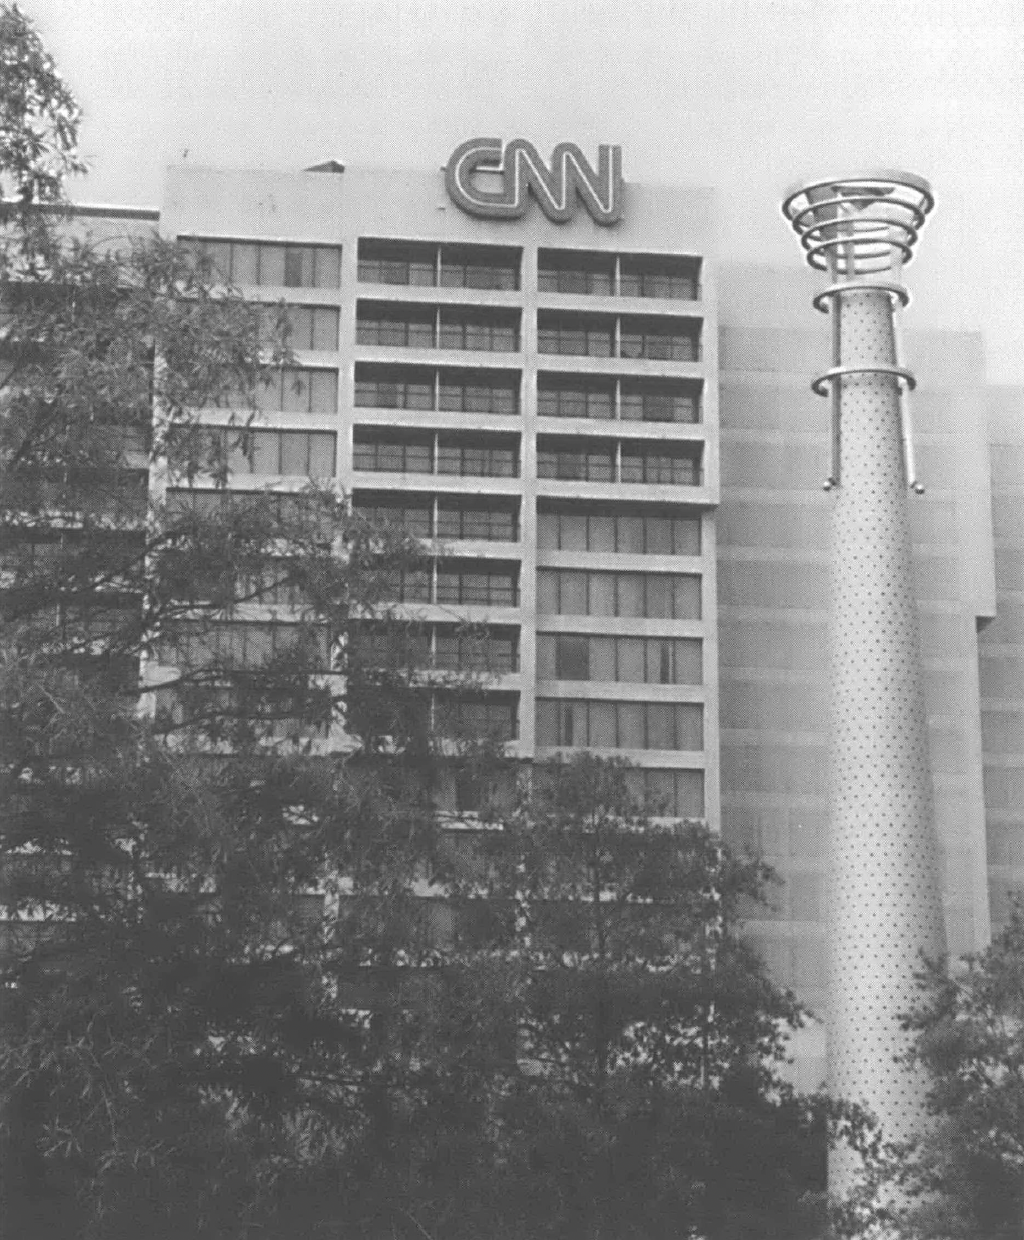 The CNN tower in Atlanta